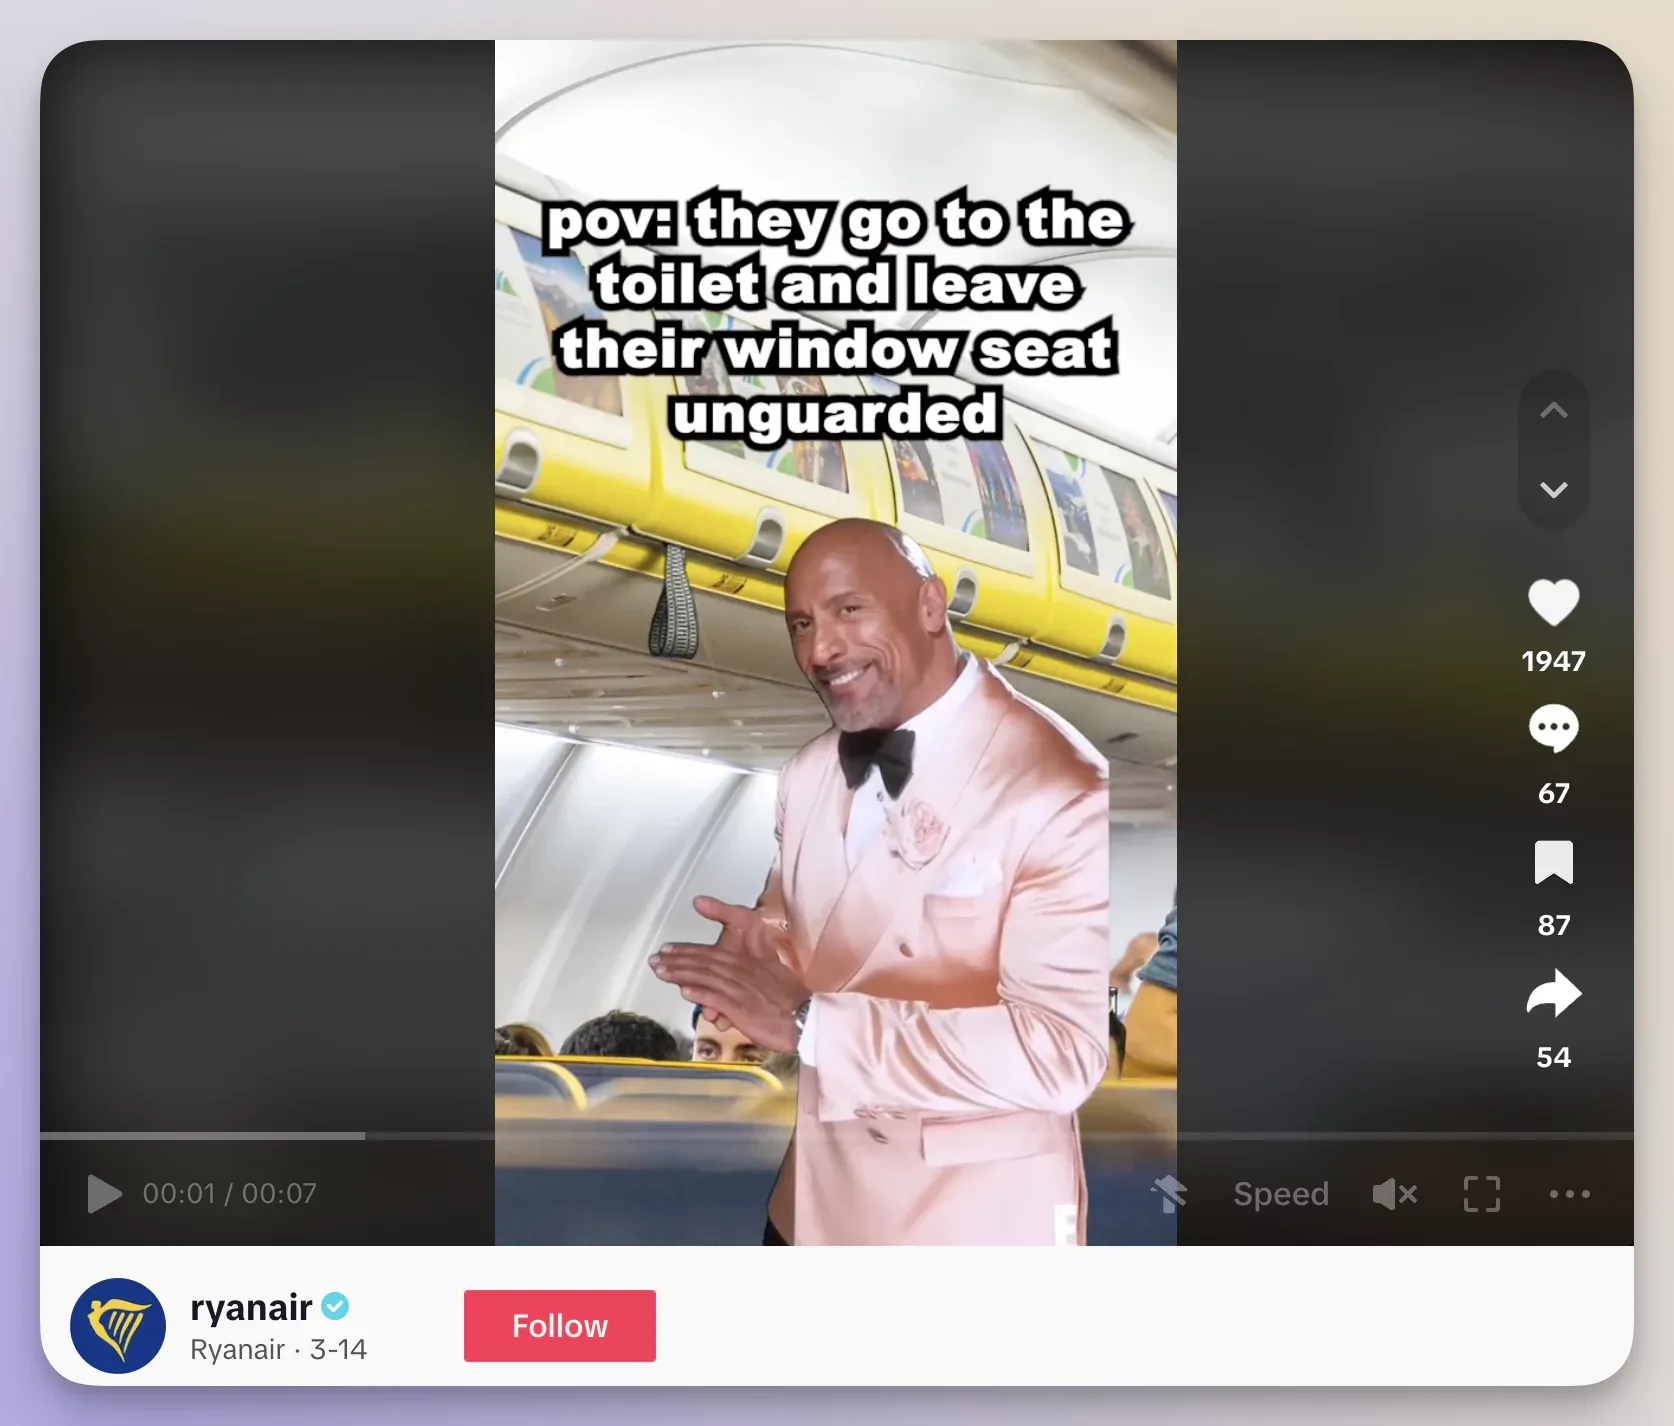 Ryanair uses trending templates for its TikTok videos